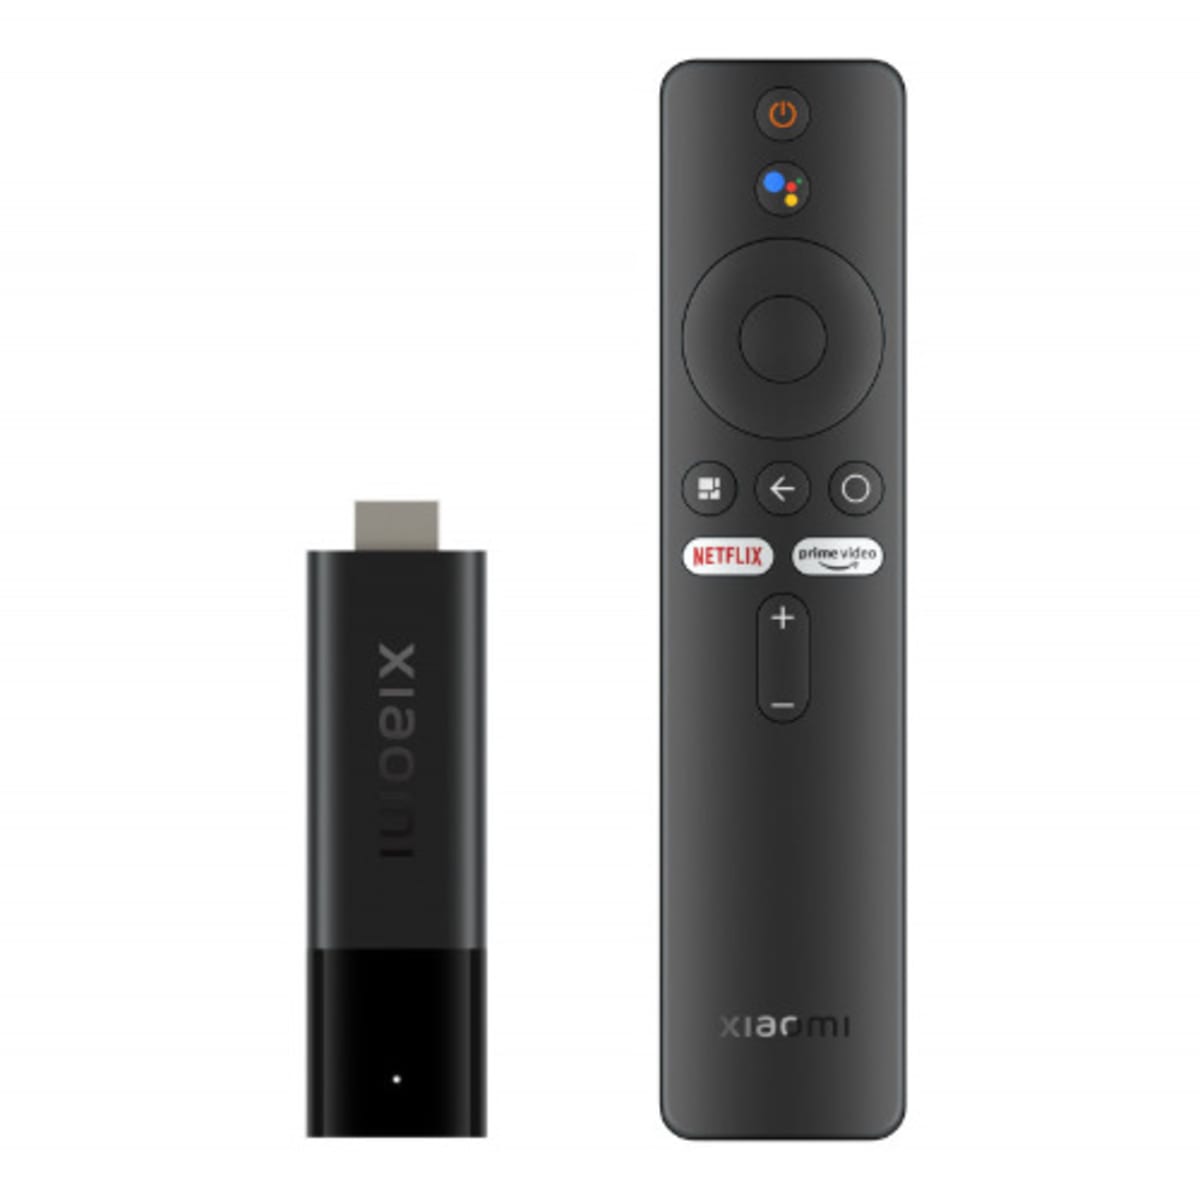 Xiaomi Mi Tv Stick 4k With Google Assistant Voice Remote Control